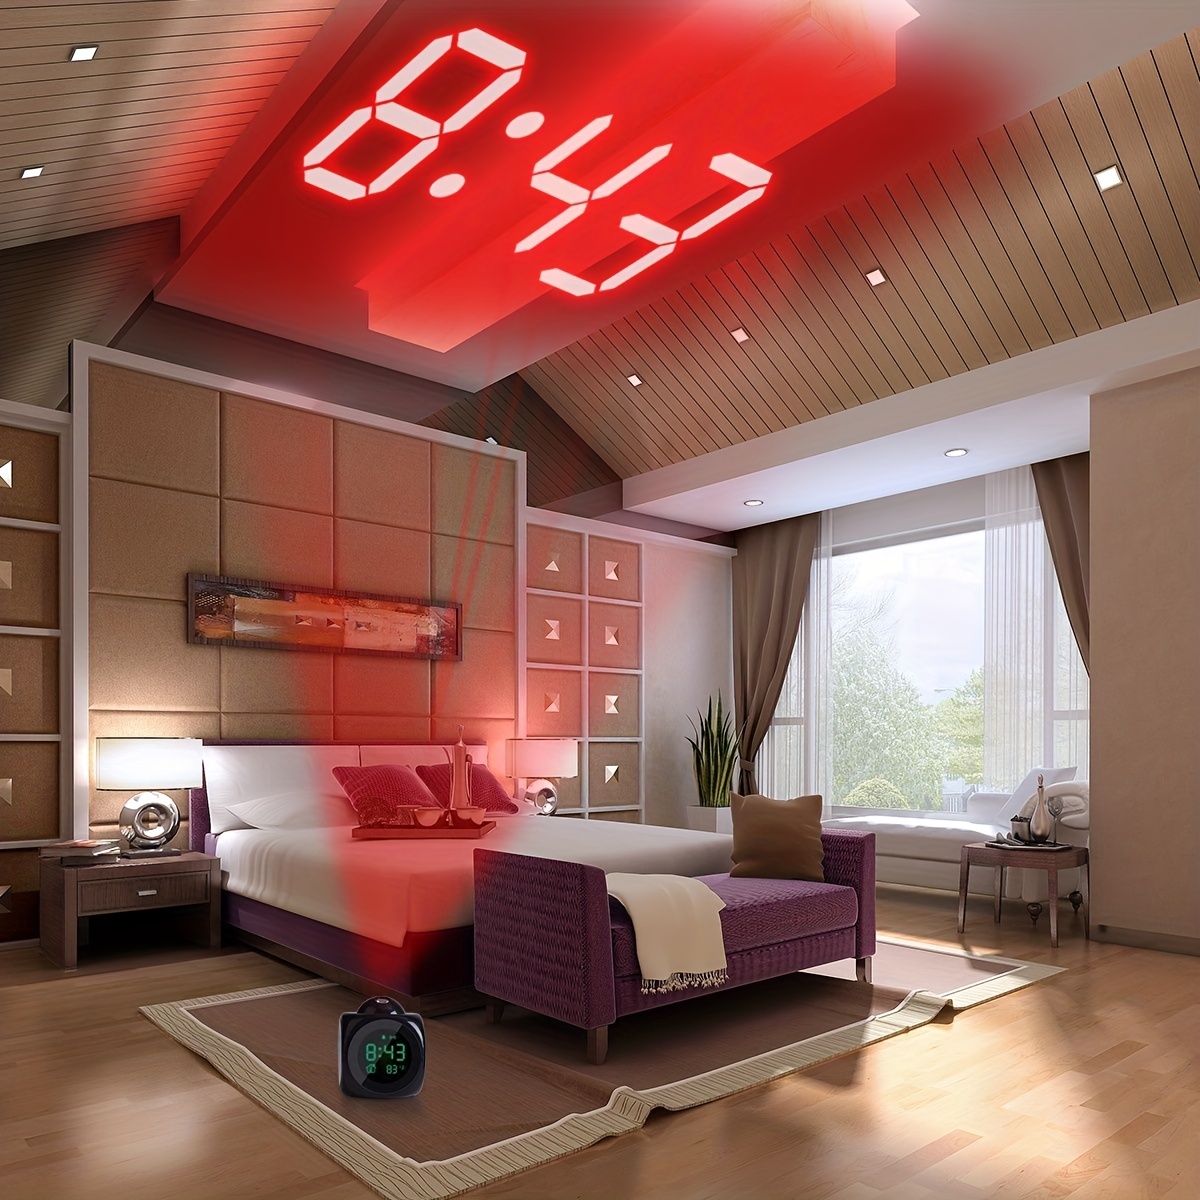 

1pc Lcd Digital Projection Alarm Clock, Lcd Screen Display Alarm Clock Time, Time Wall Projection Alarm Clock, Durable Alarm Clock For Living Room Bedroom, Room Decor, Home Decor